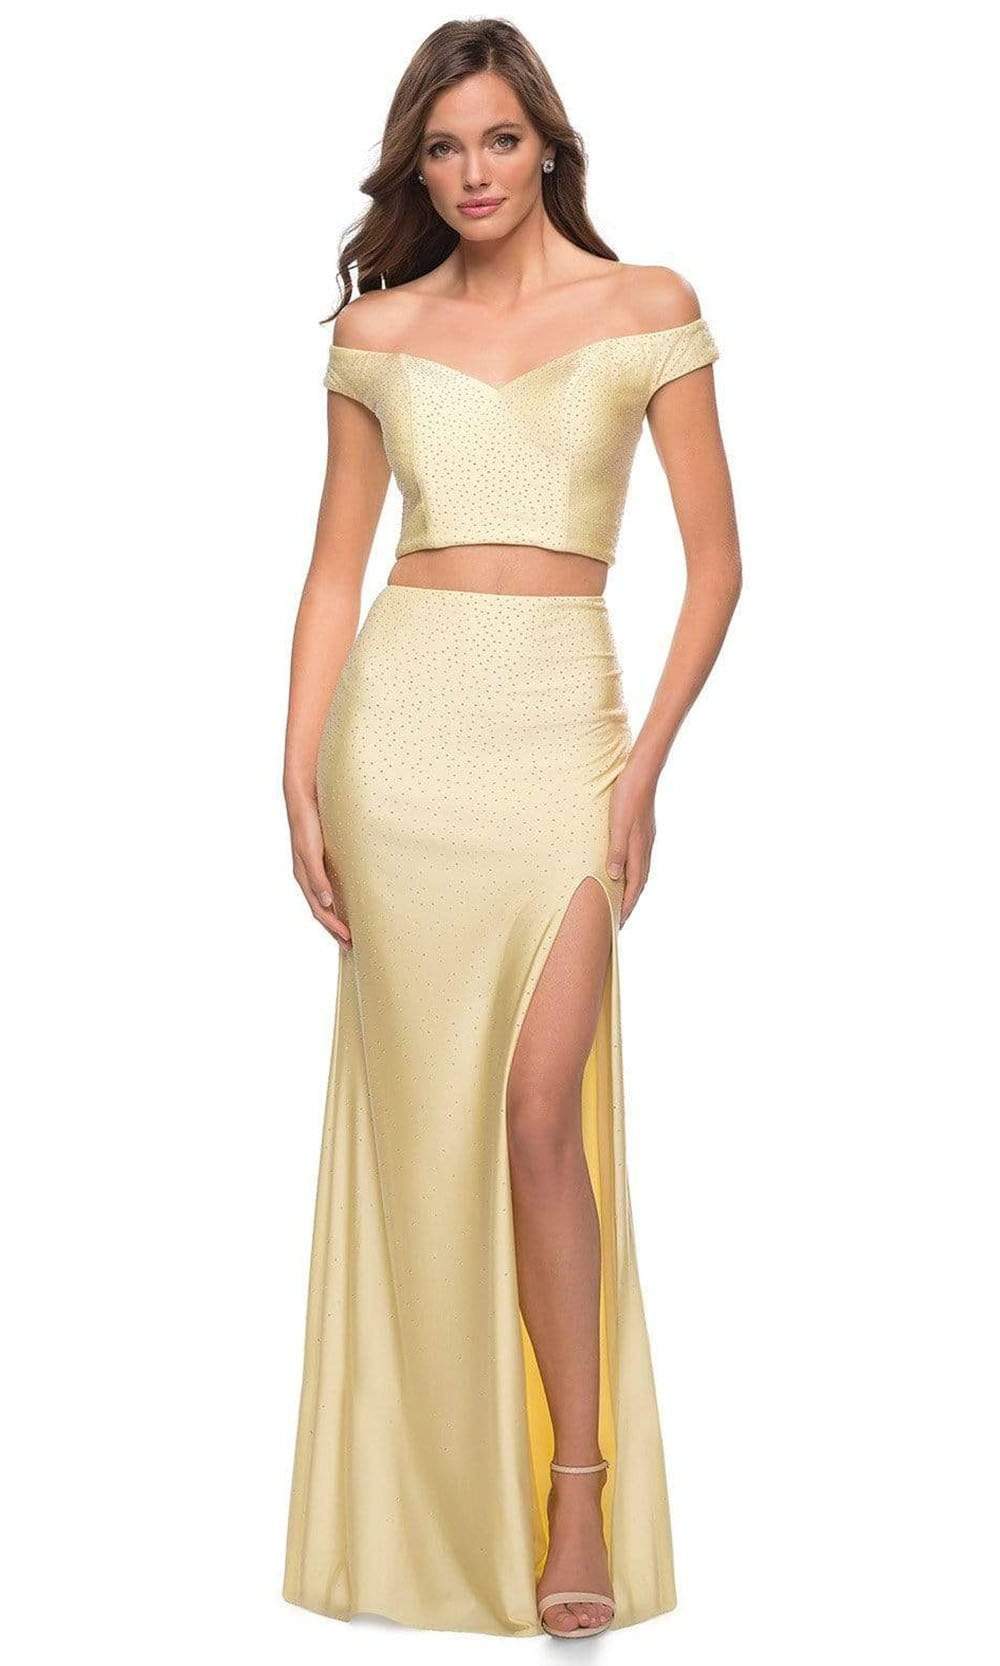 La Femme - 29951 Two-Piece Jewel Studded Junior Prom Dress
